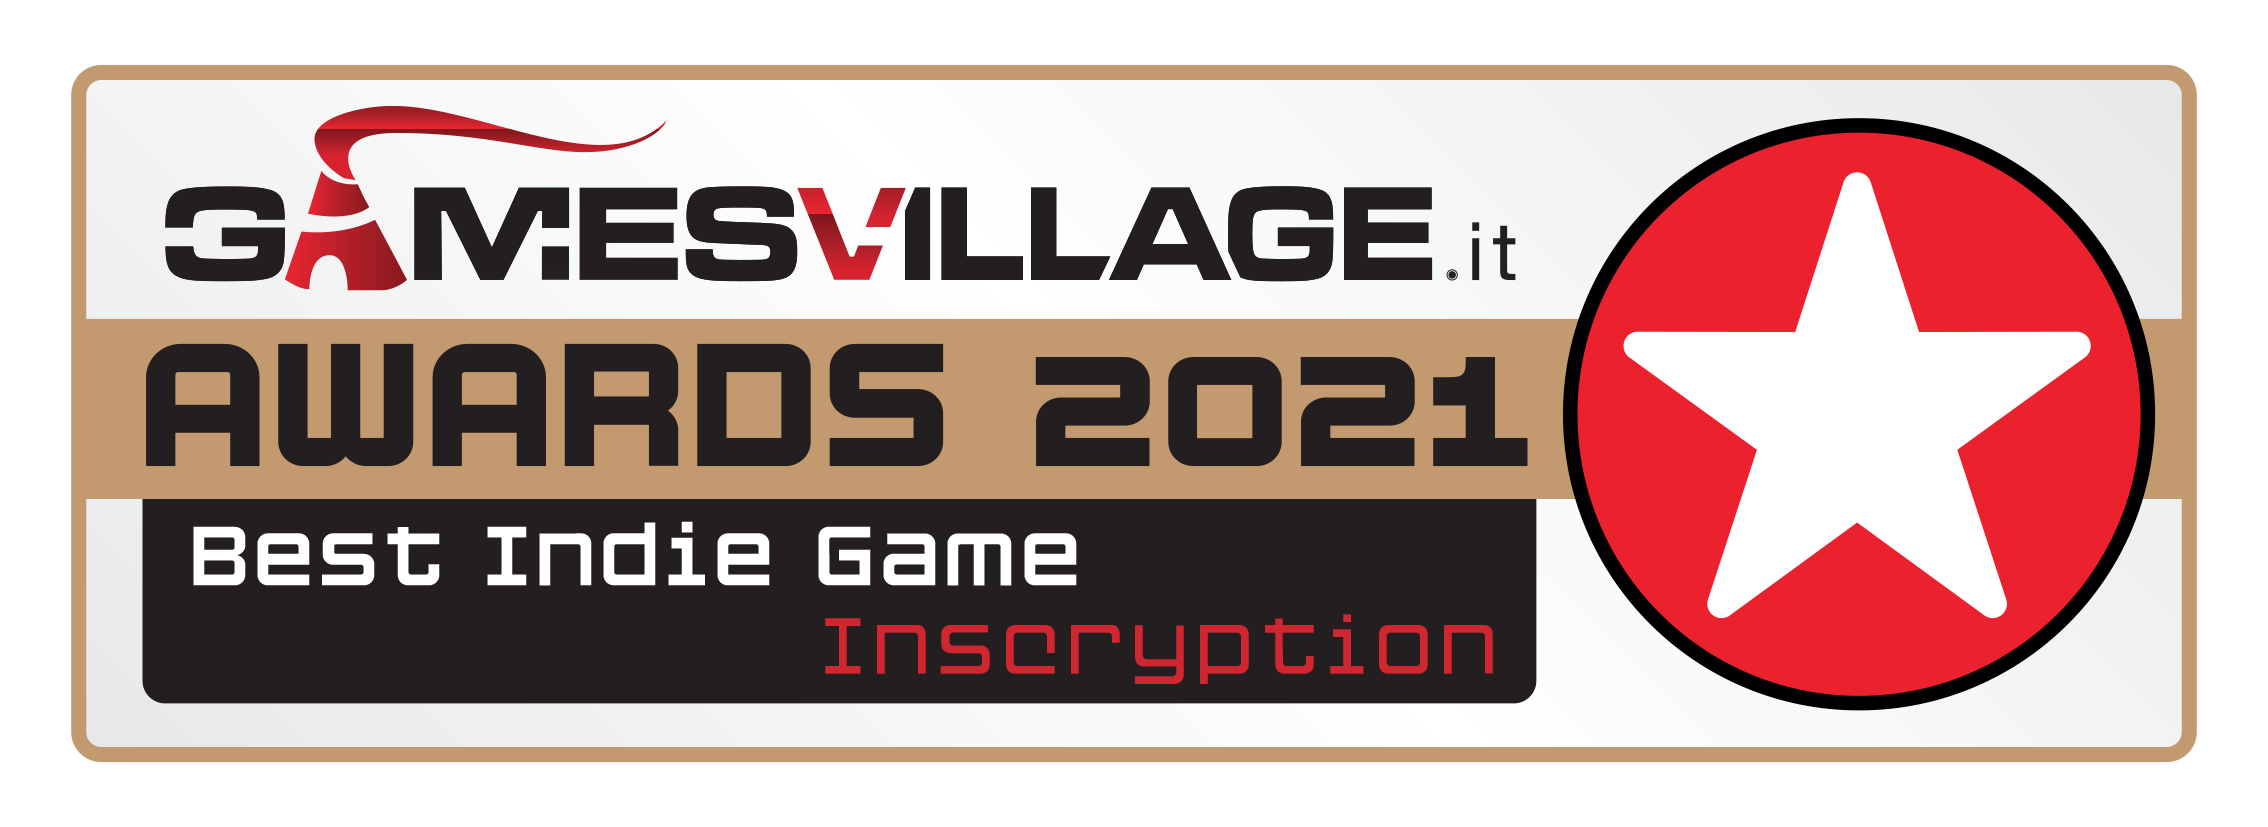 GamesVillage Awards 2021